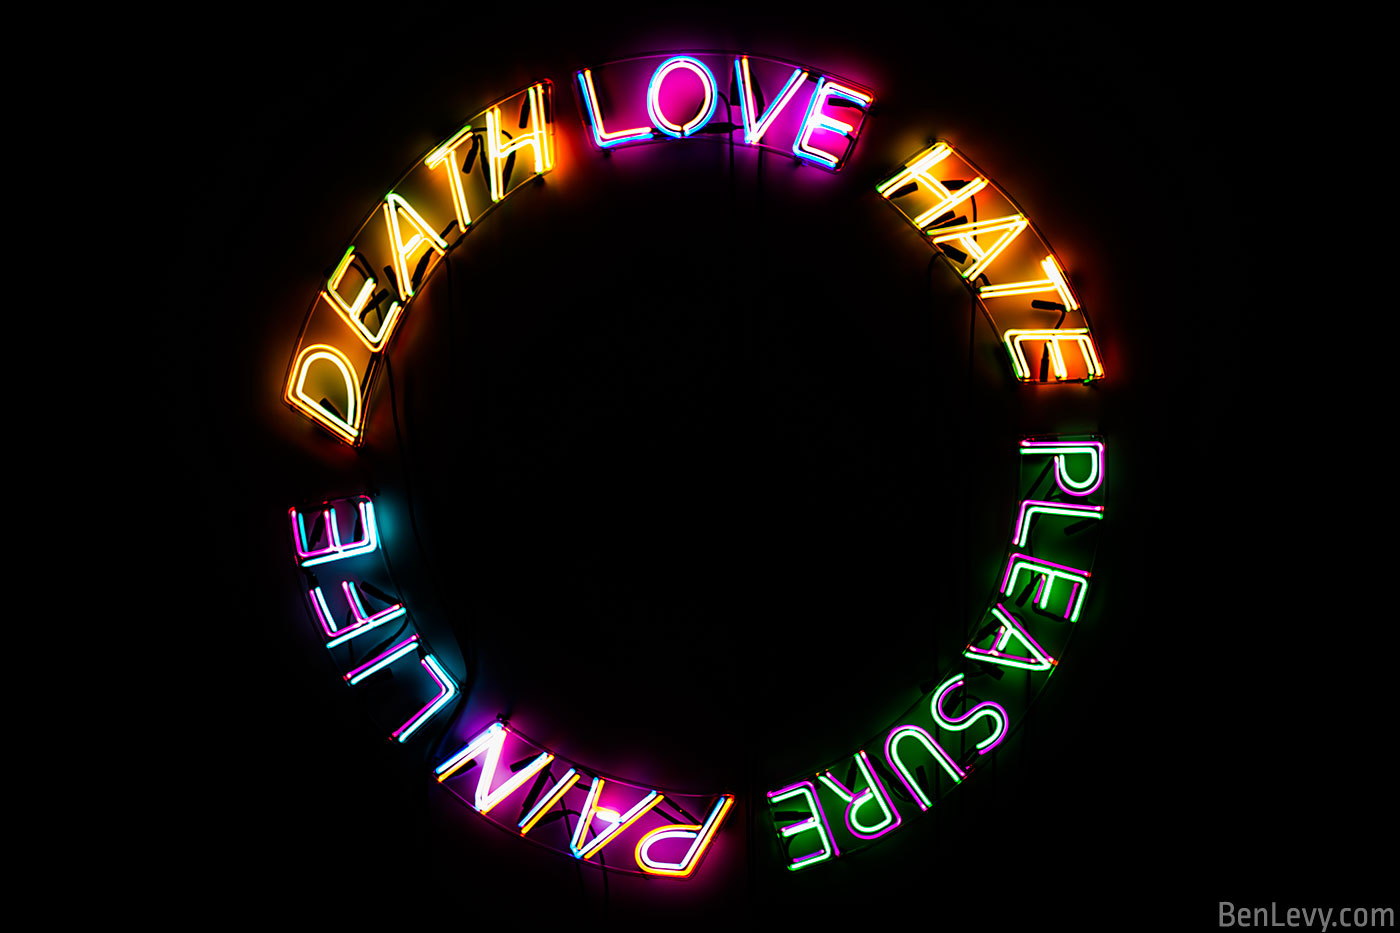 Life, Death, Love, Hate, Pleasure, Pain by Bruce Nauman